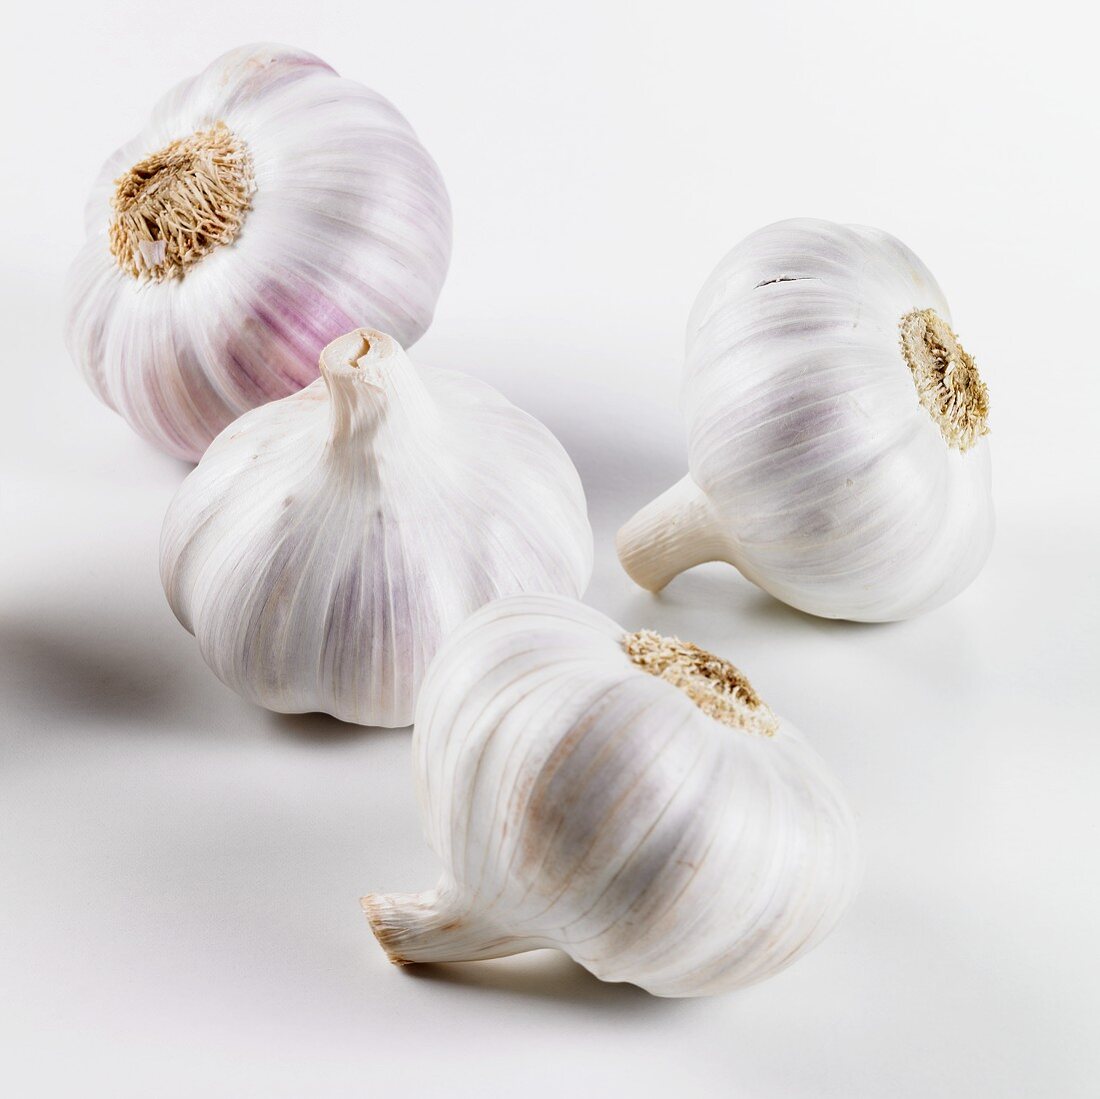 Four garlic bulbs